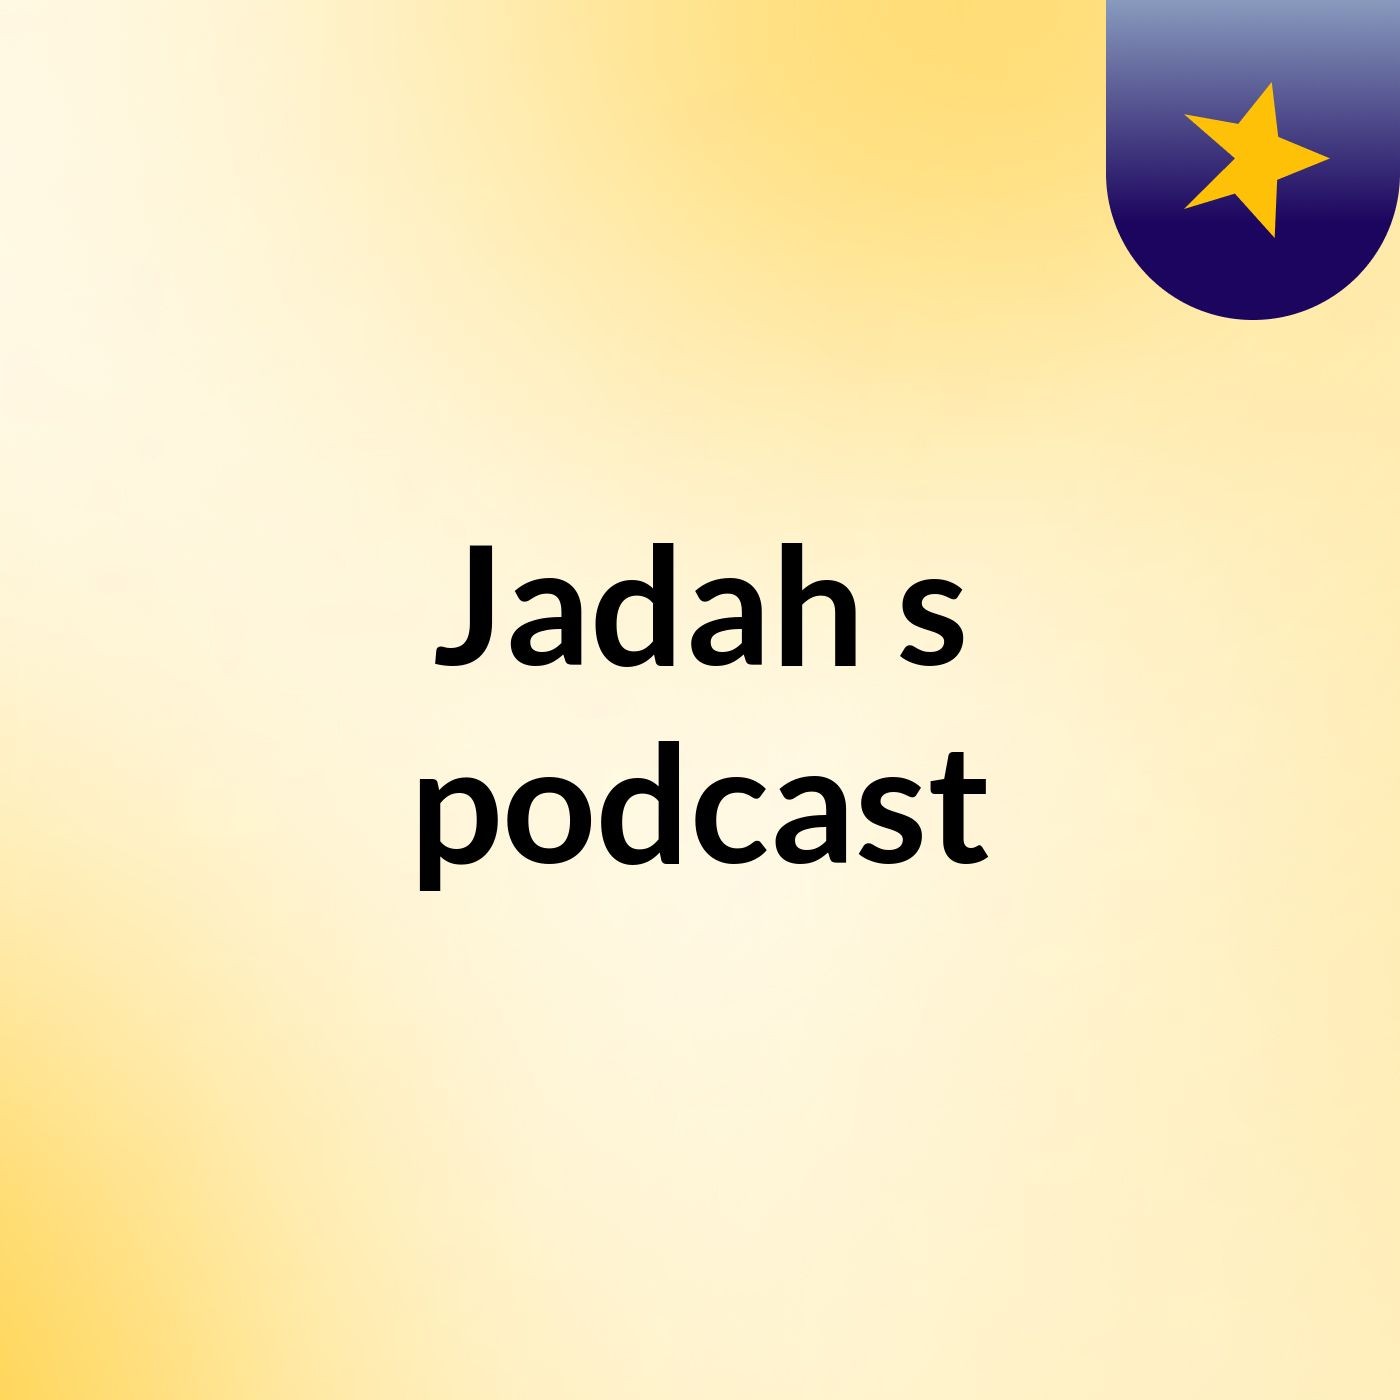 Episode 2 - Jadah's podcast